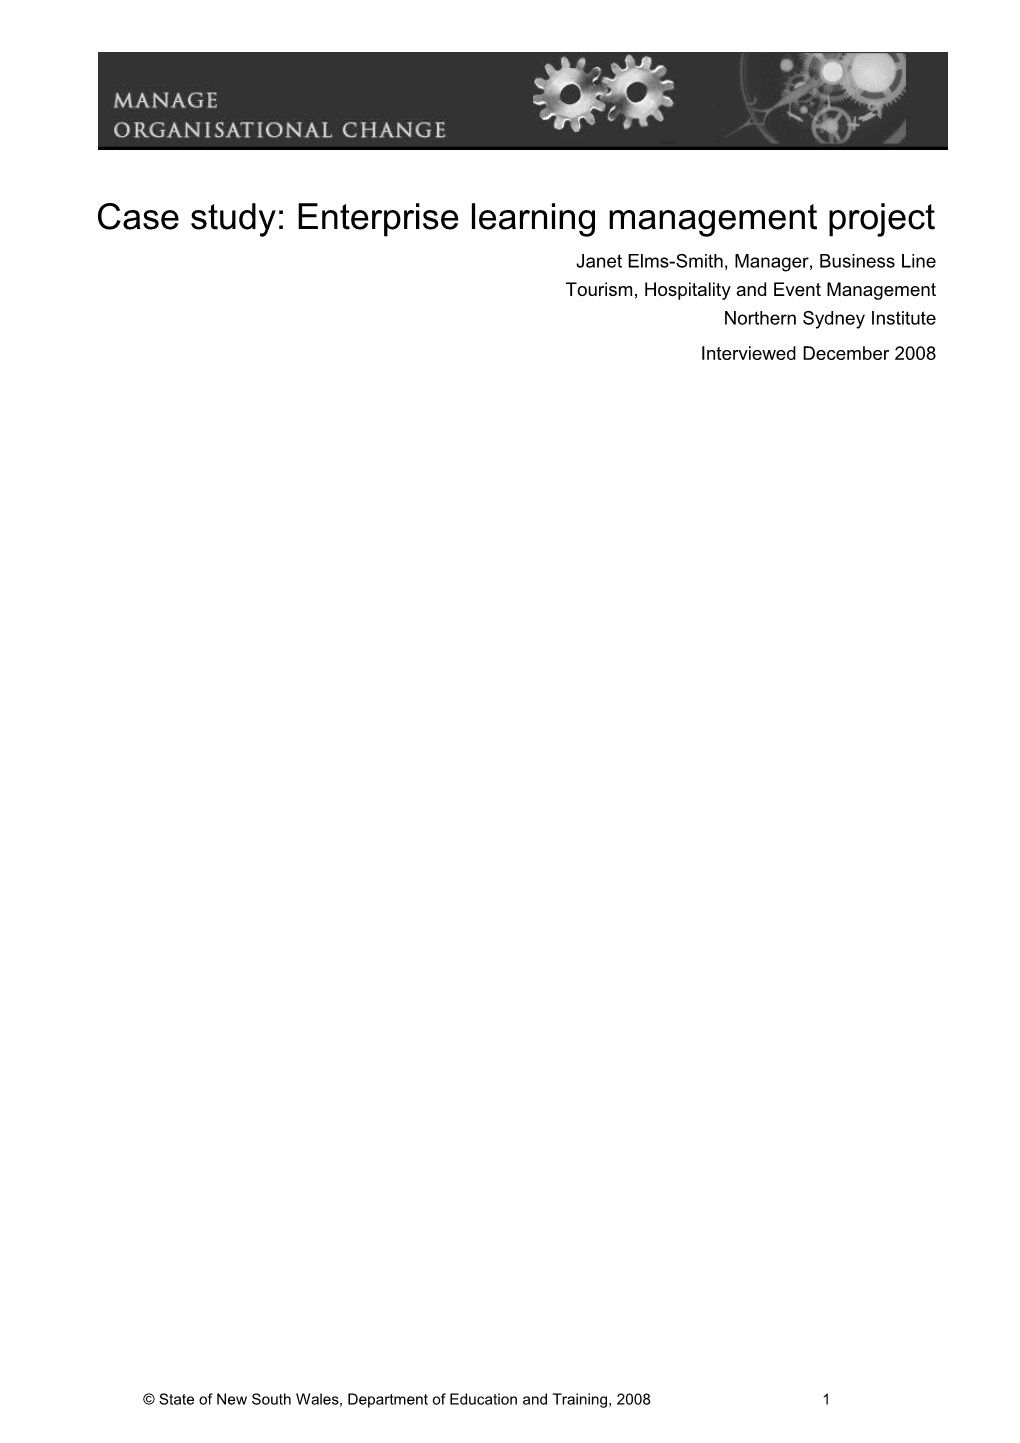 Case Study: Enterprise Learning Management Project